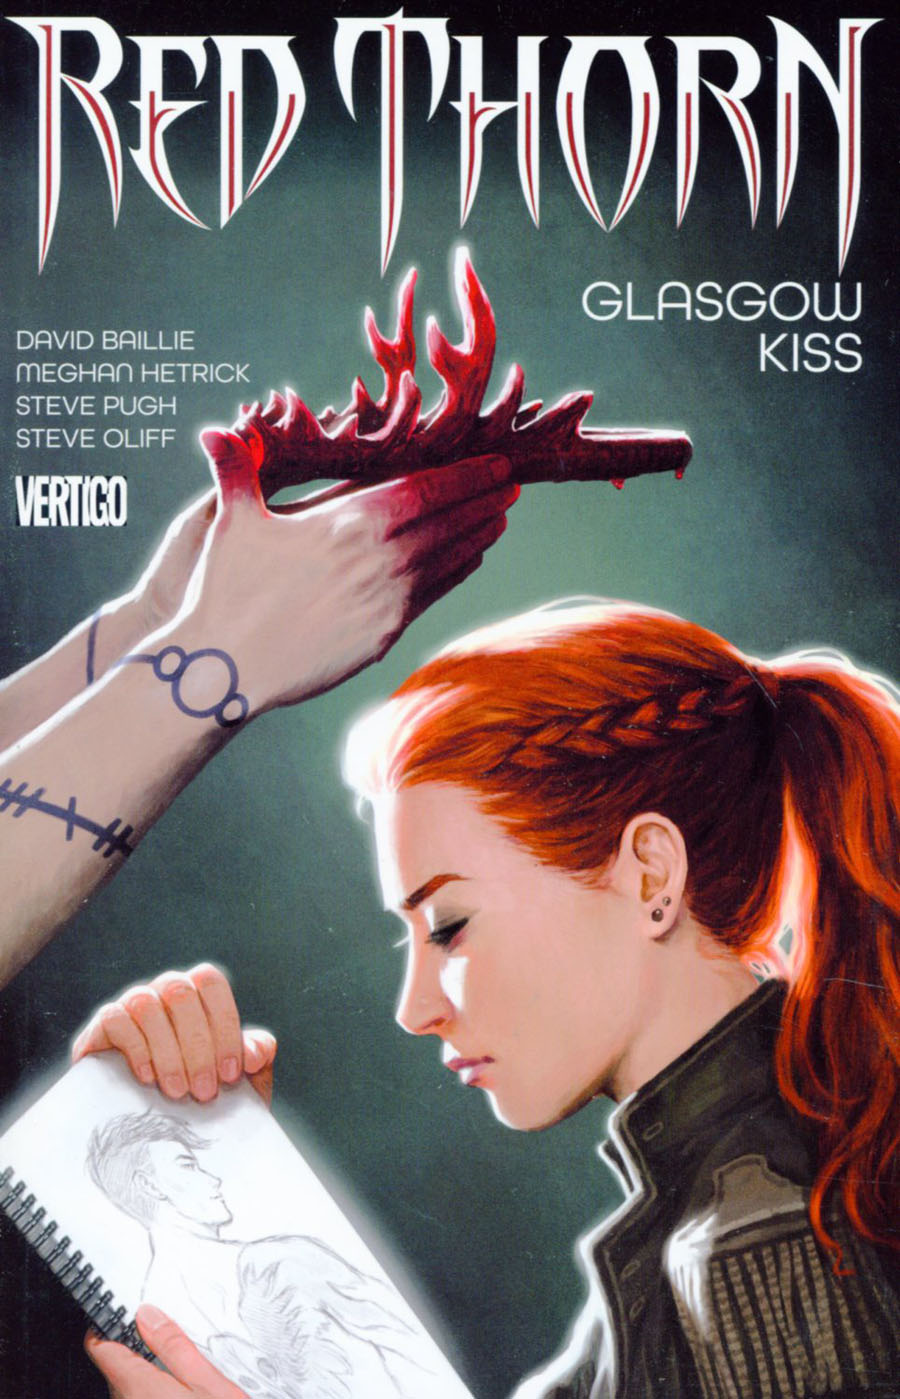 Red Thorn Vol 1 Glasgow Kiss TP